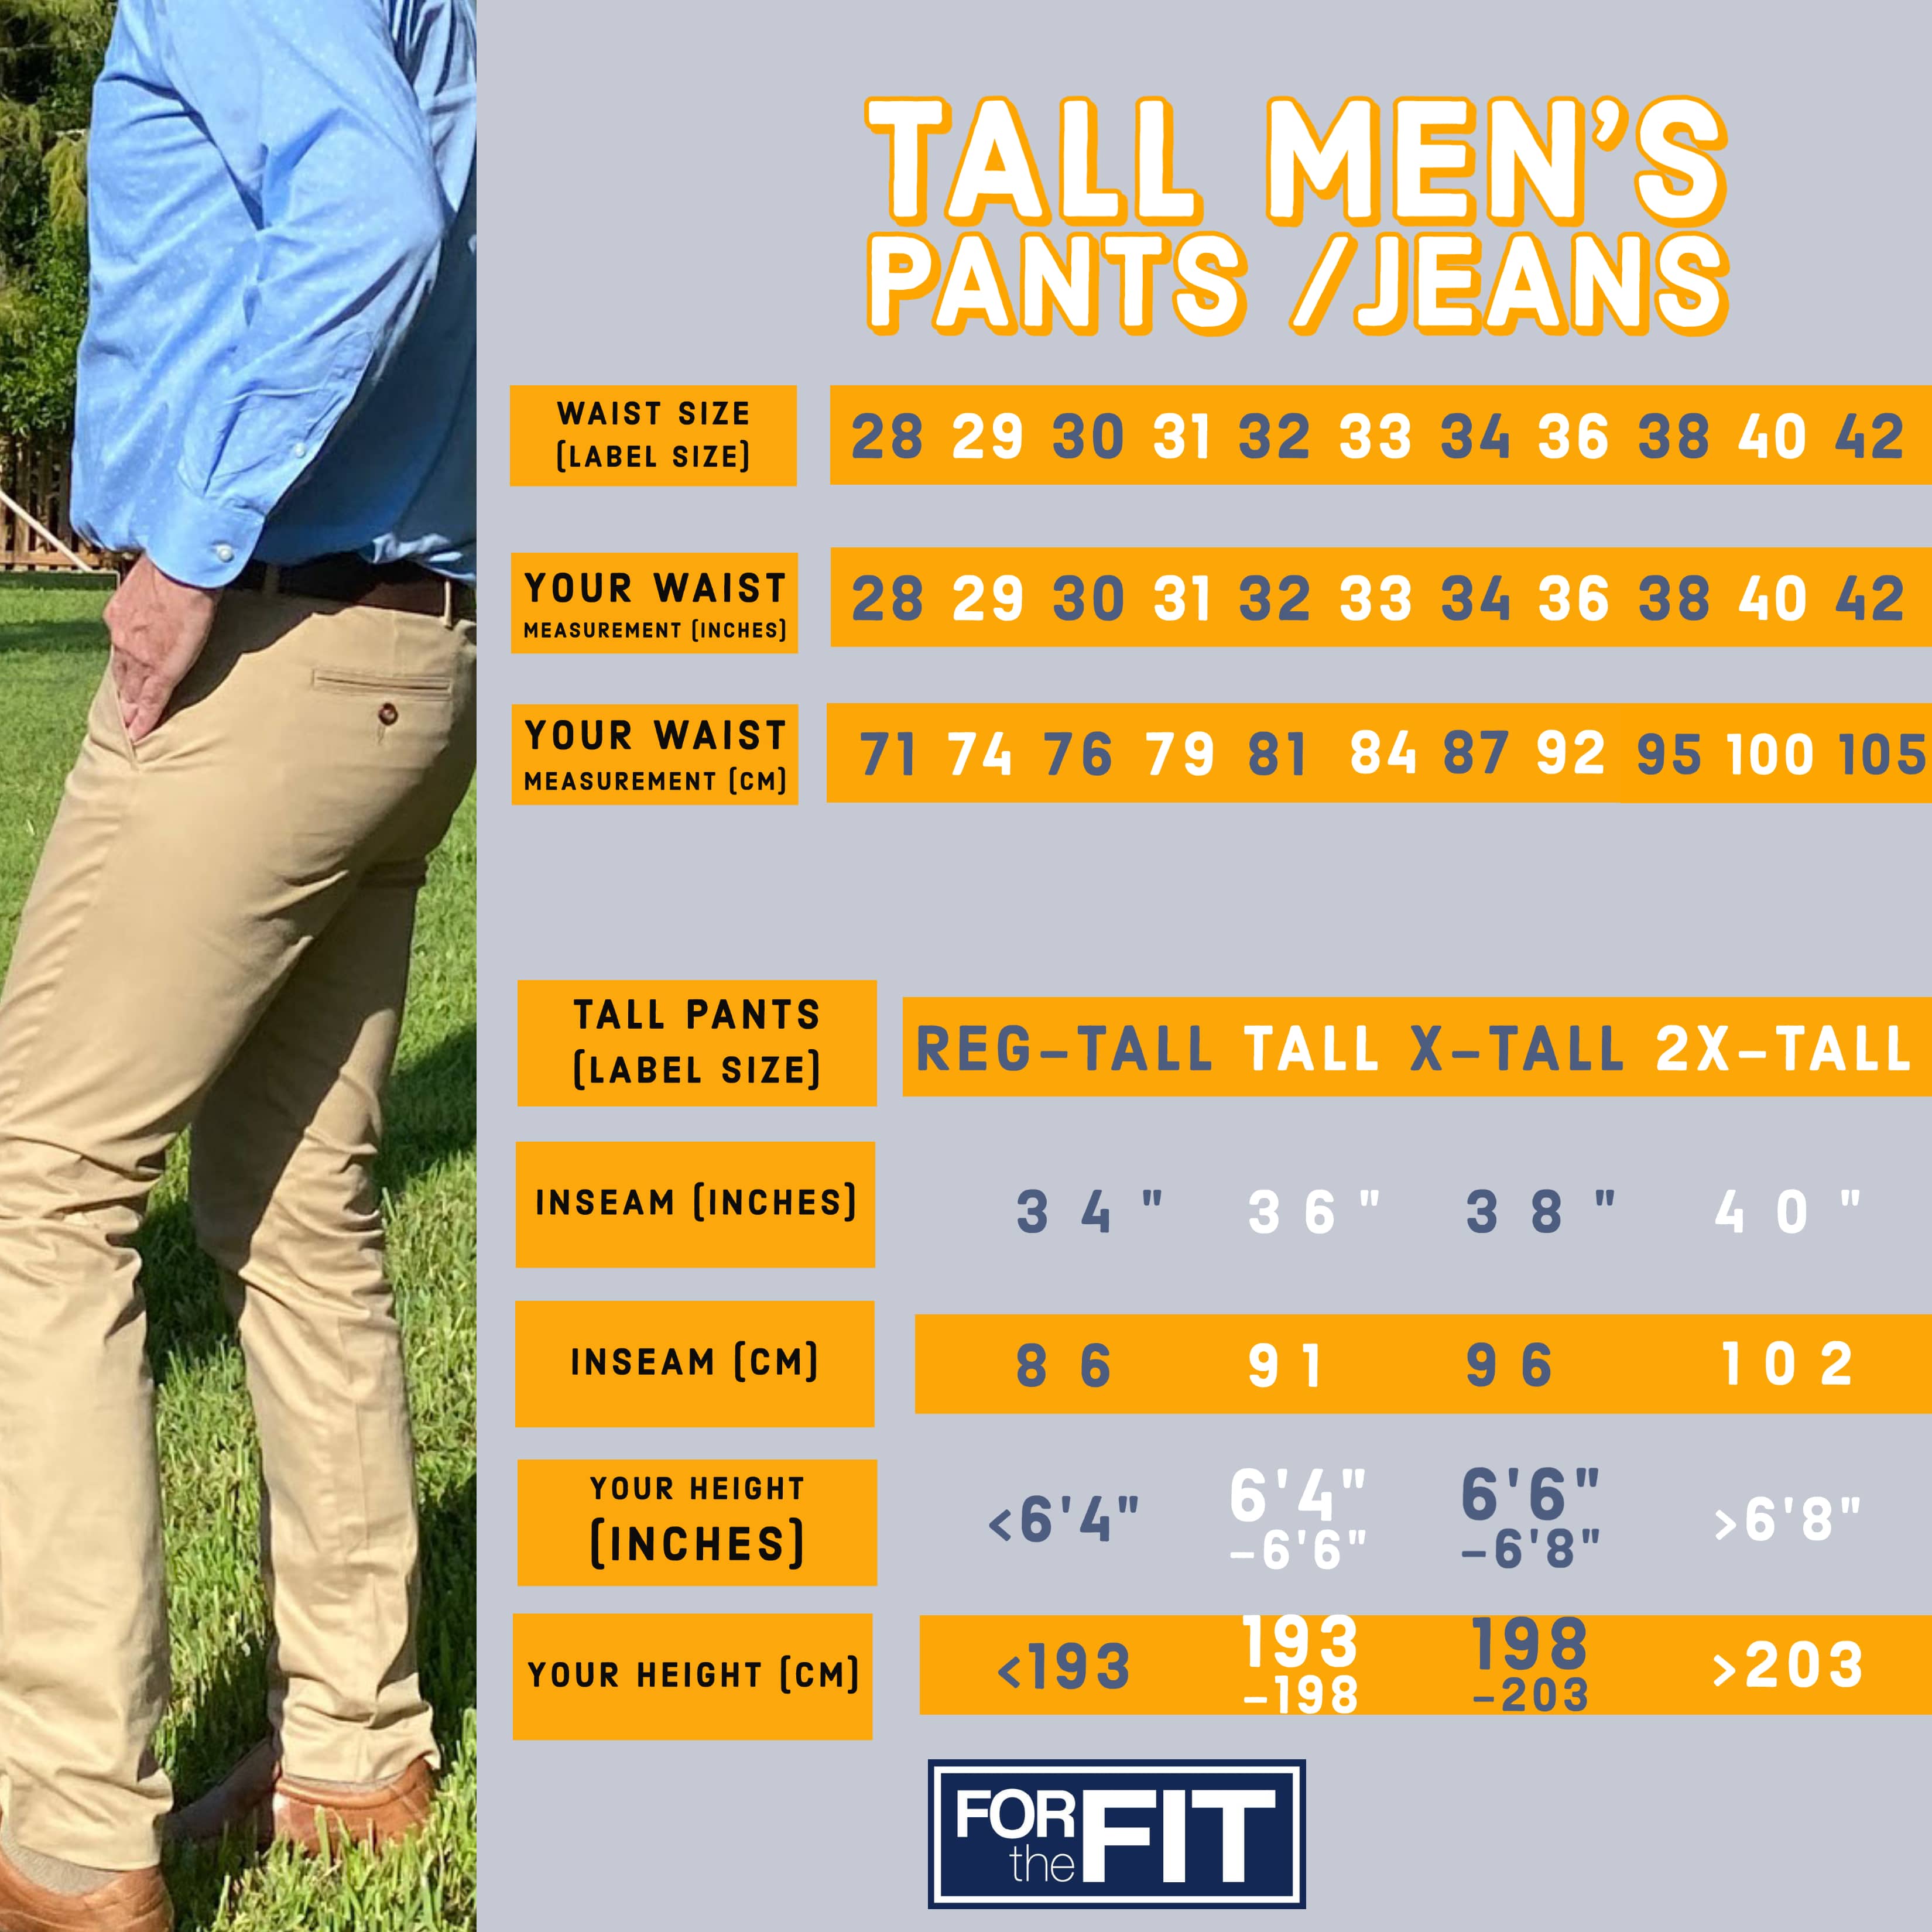 Golf Pants 40 Size 34 in Inseam for Men for sale | eBay